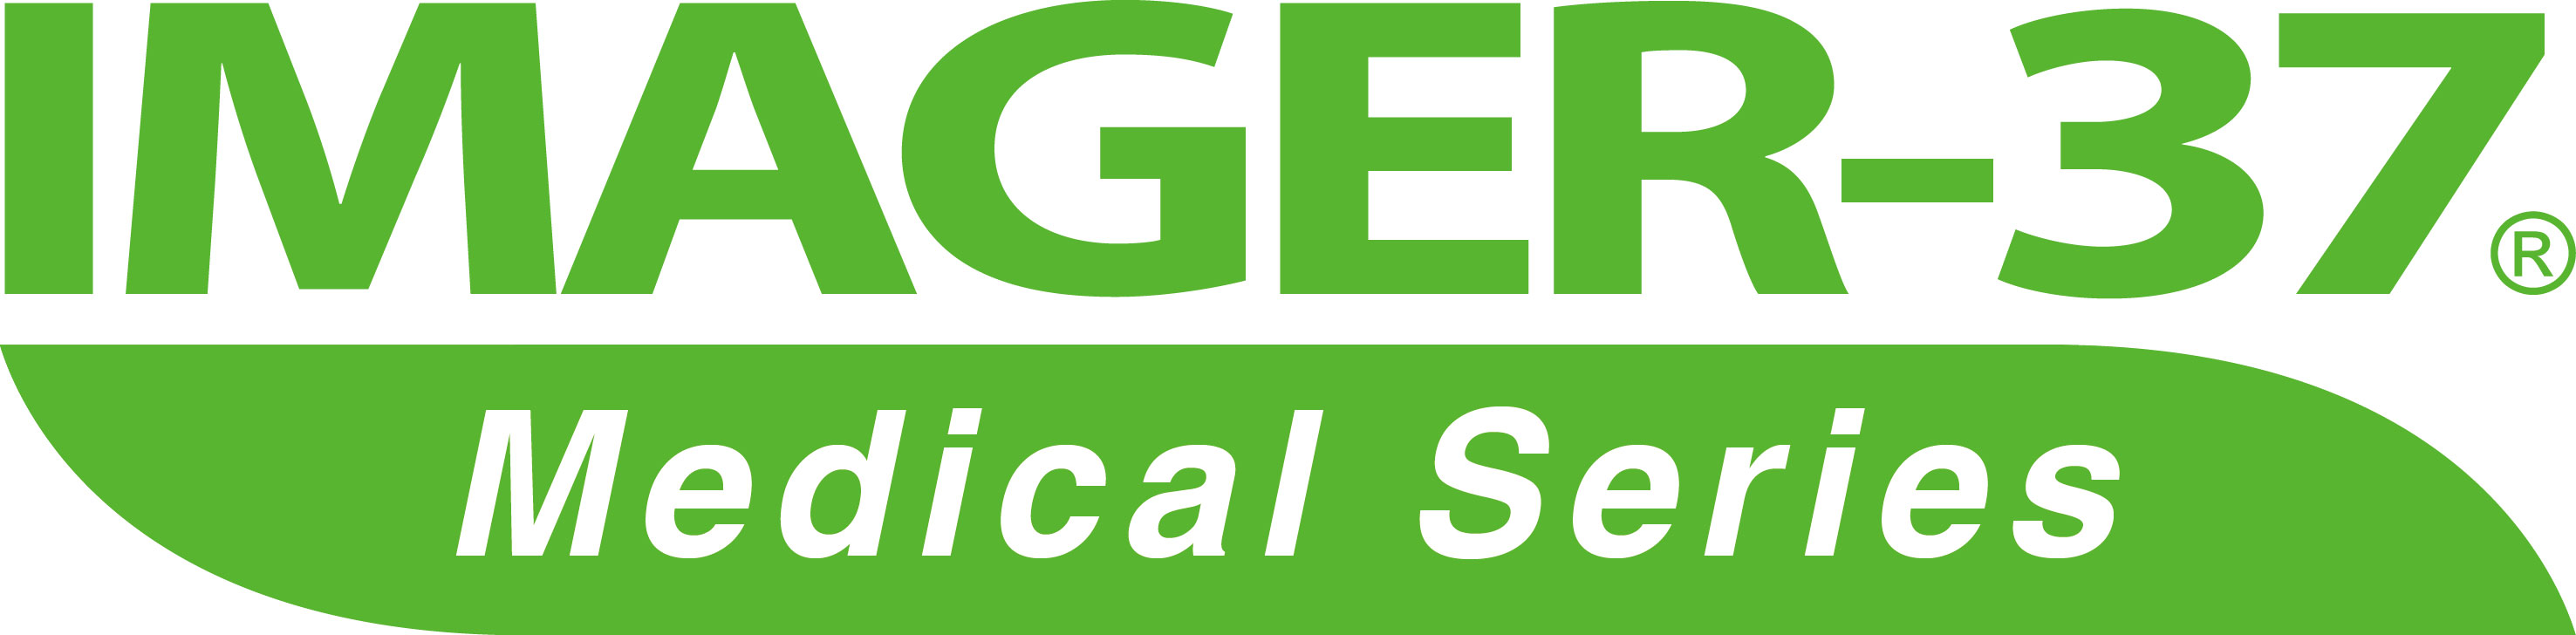 IMAGER-37 Medical Series Logo.jpg